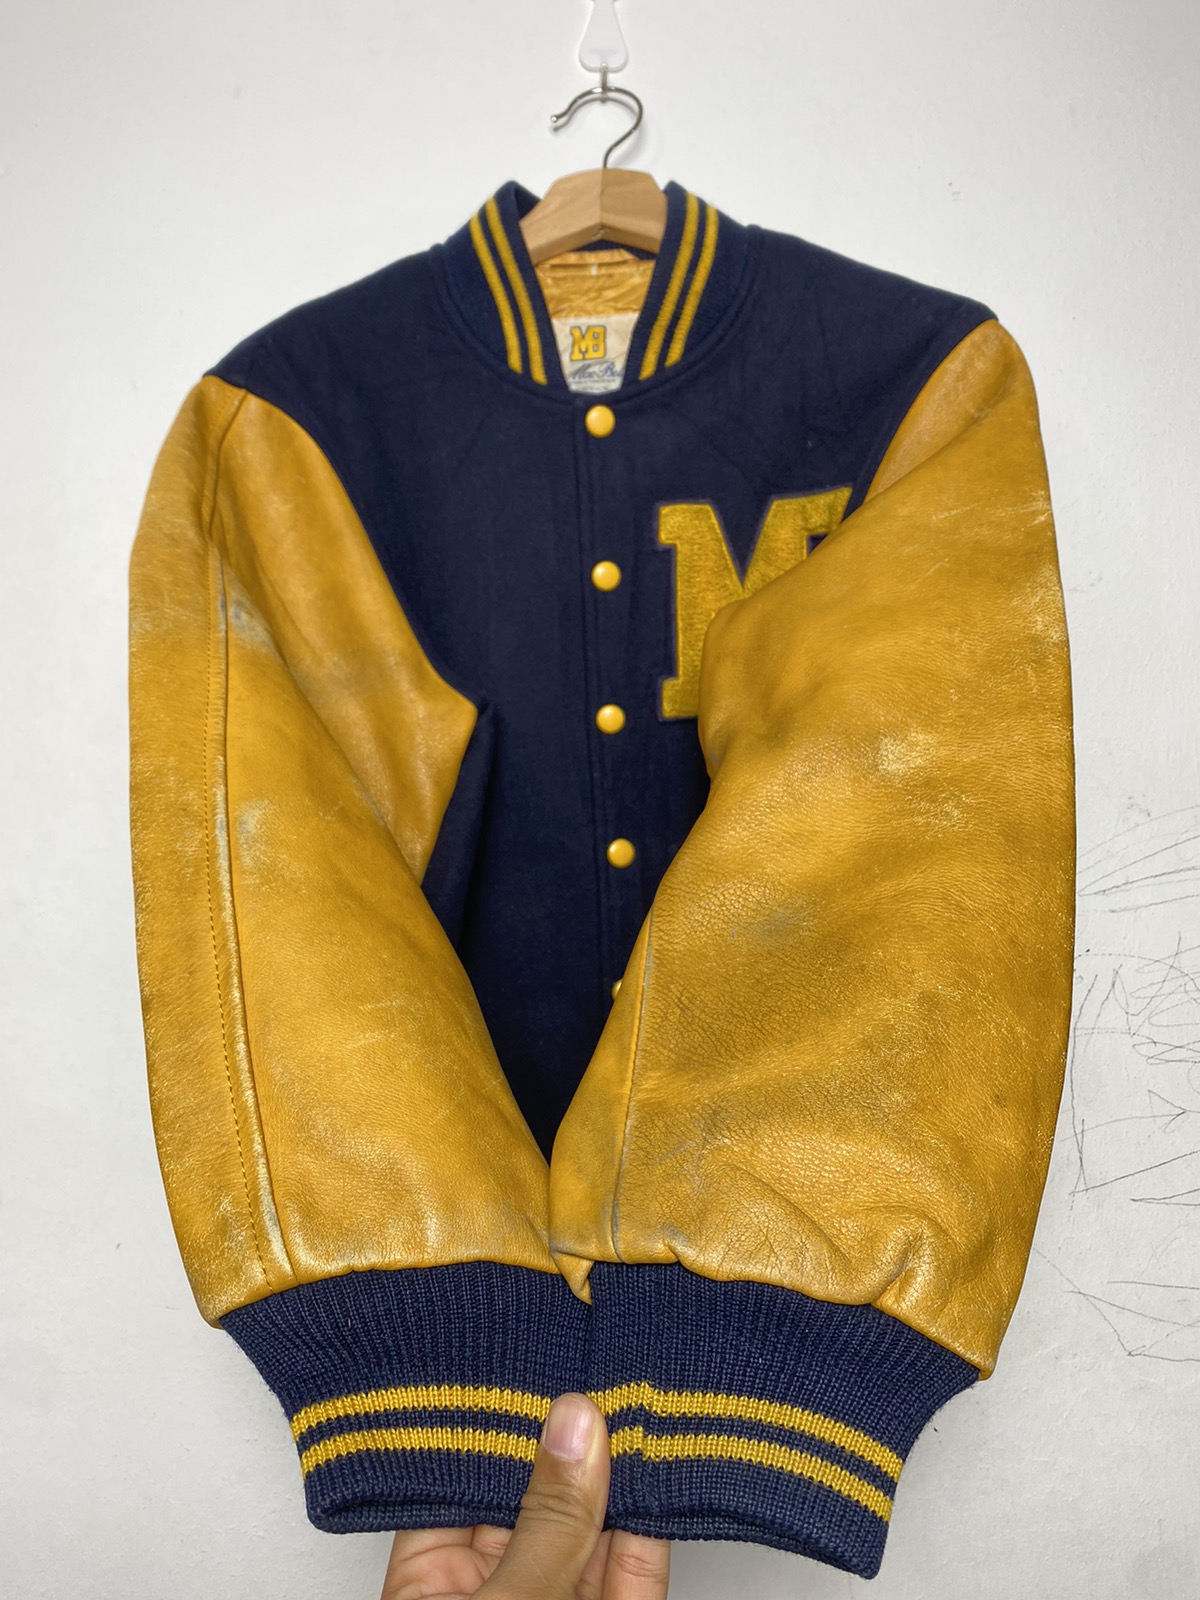 Maker of Jacket Varsity Jackets Vintage Macbeth MB Black Yellow